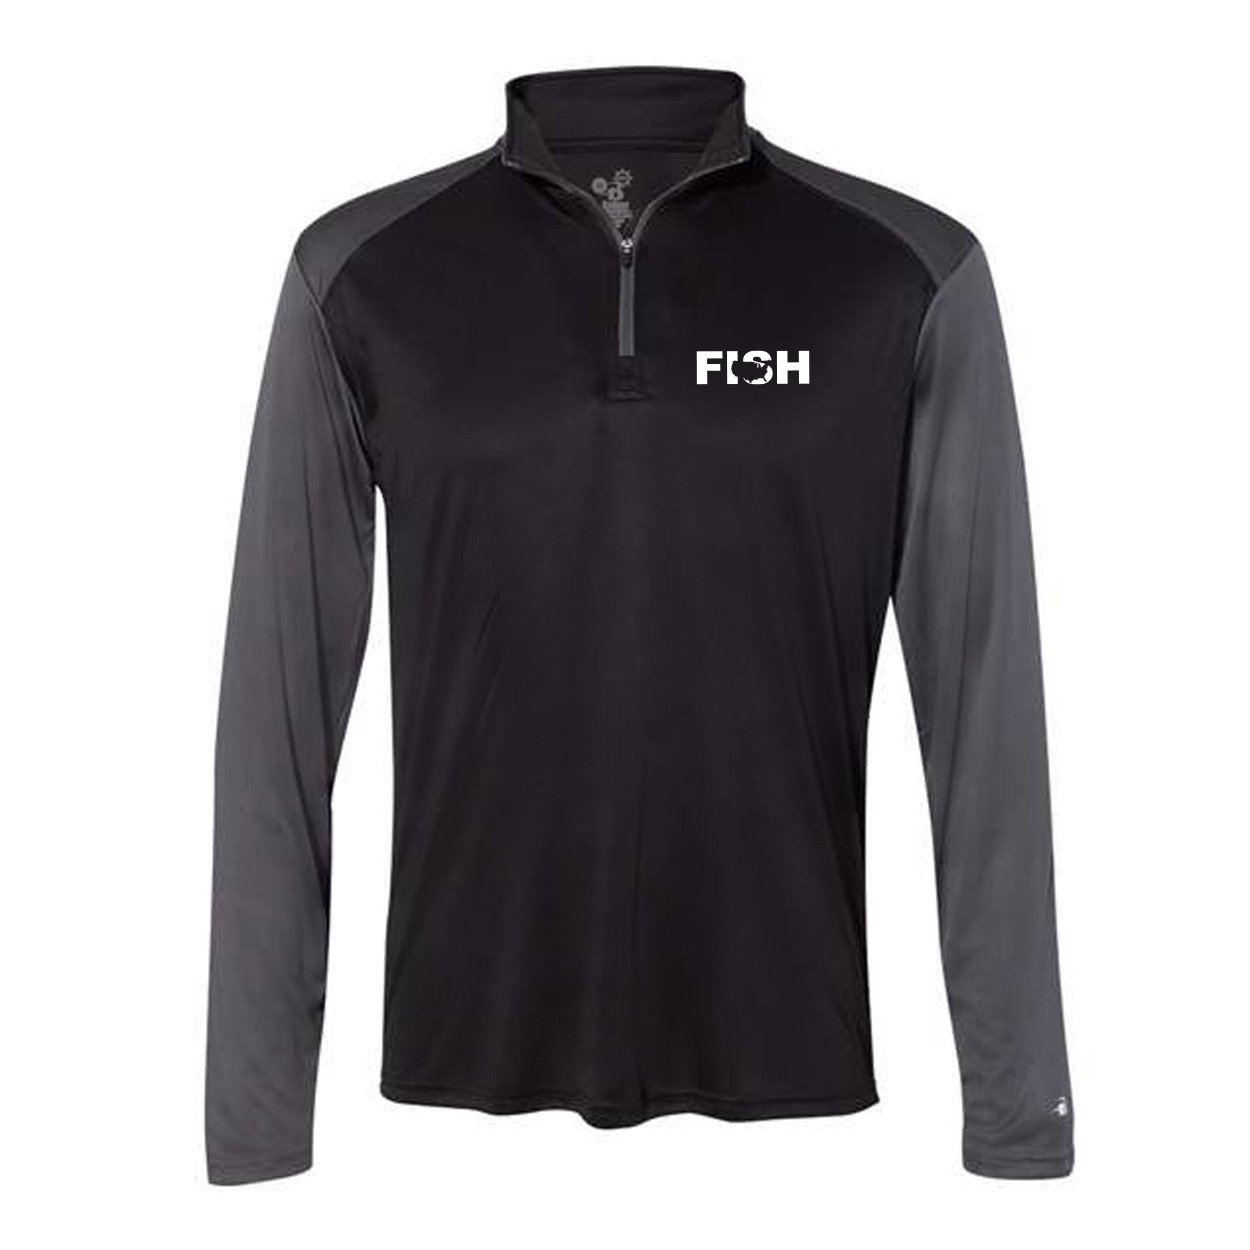 Fish United States Night Out Unisex Premium Quarter-Zip Pullover Long Sleeve Shirt Black/Graphite (White Logo)